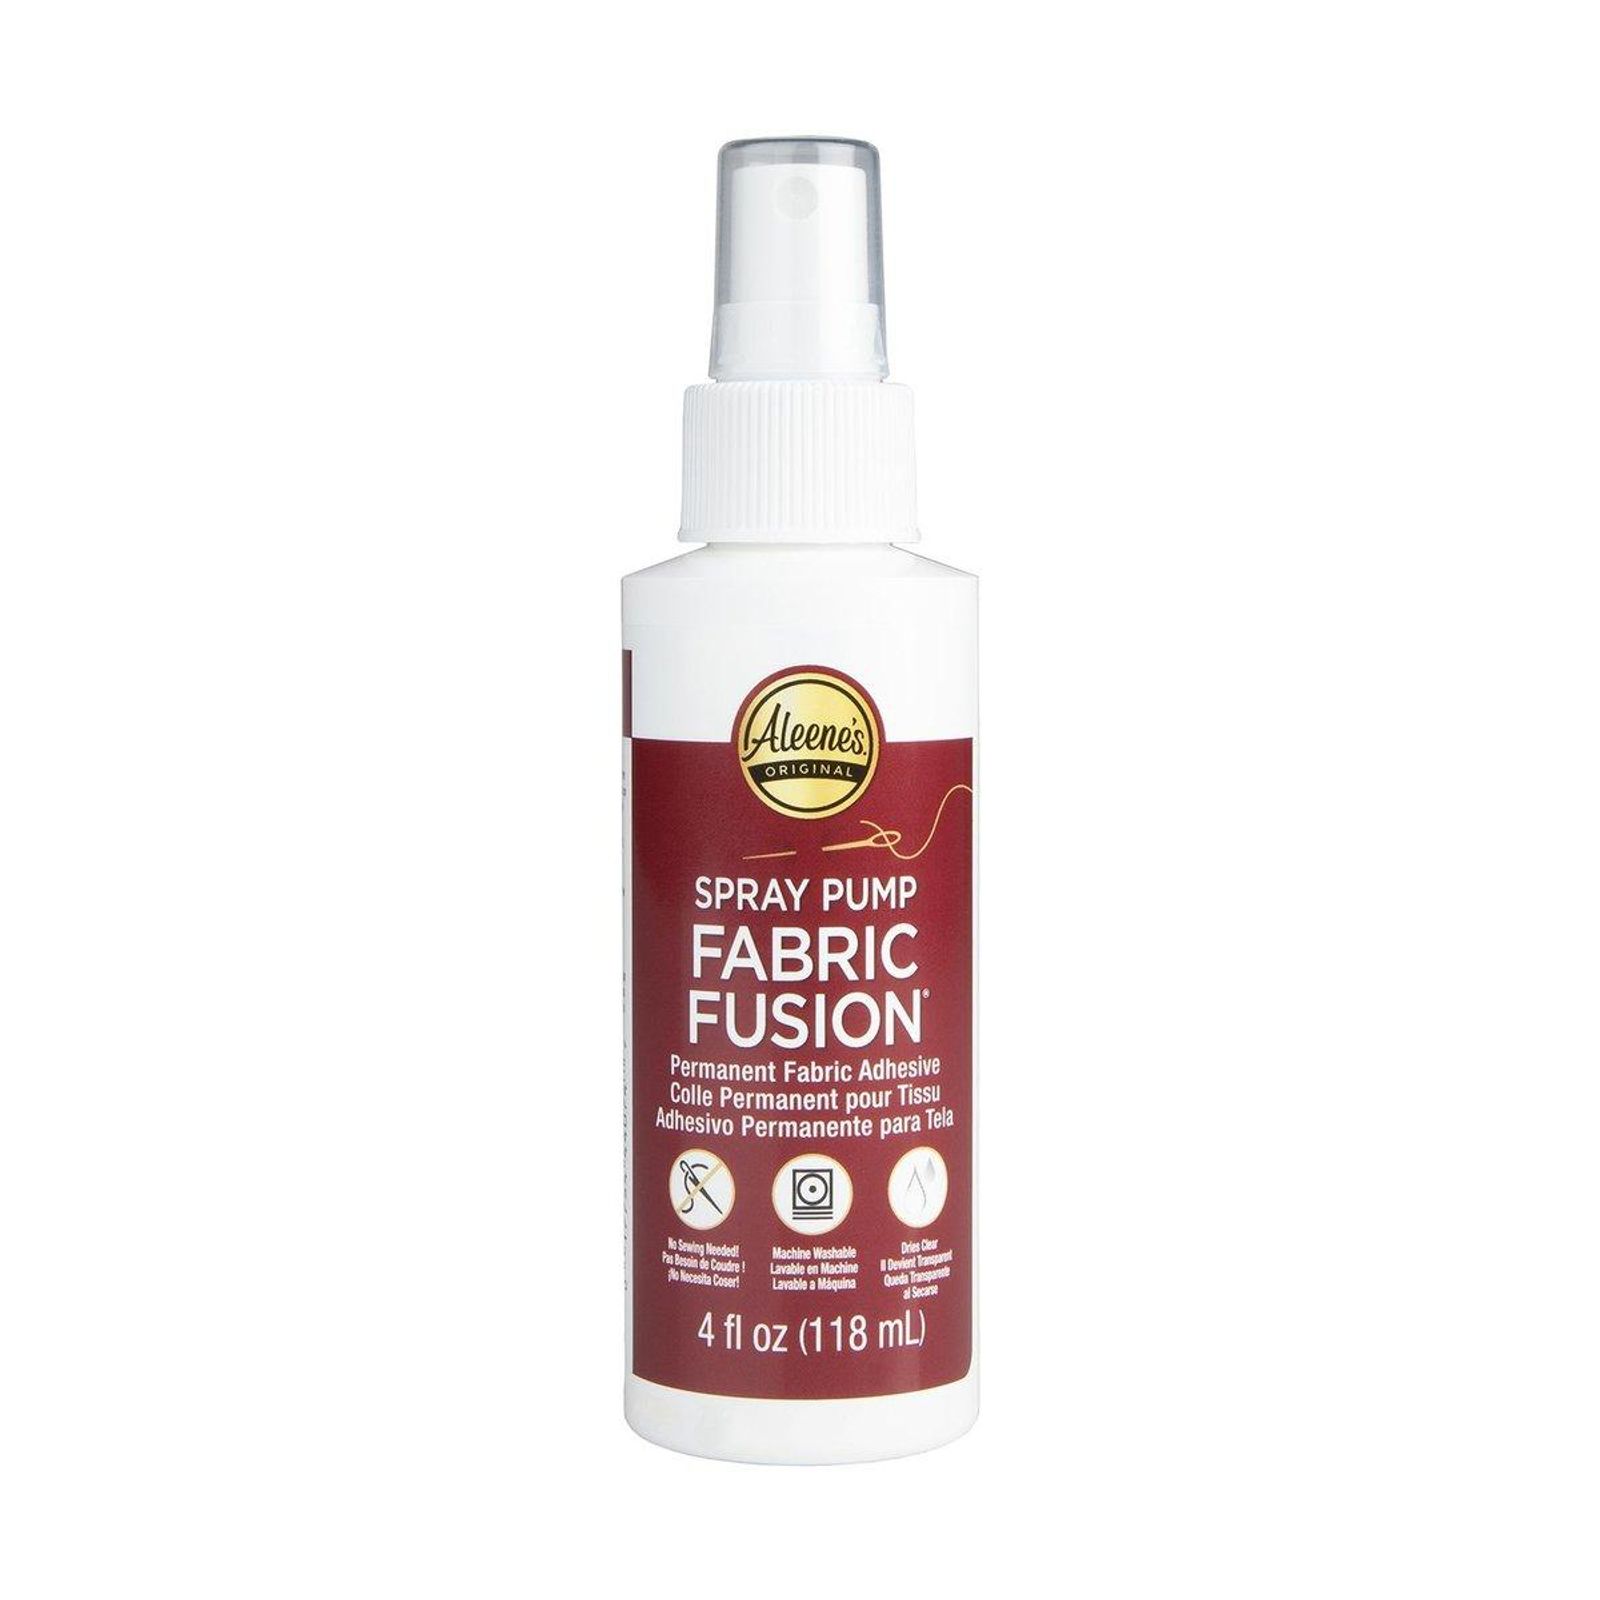 Aleene's | Fabric fusion glue permanent spray pump 118ml